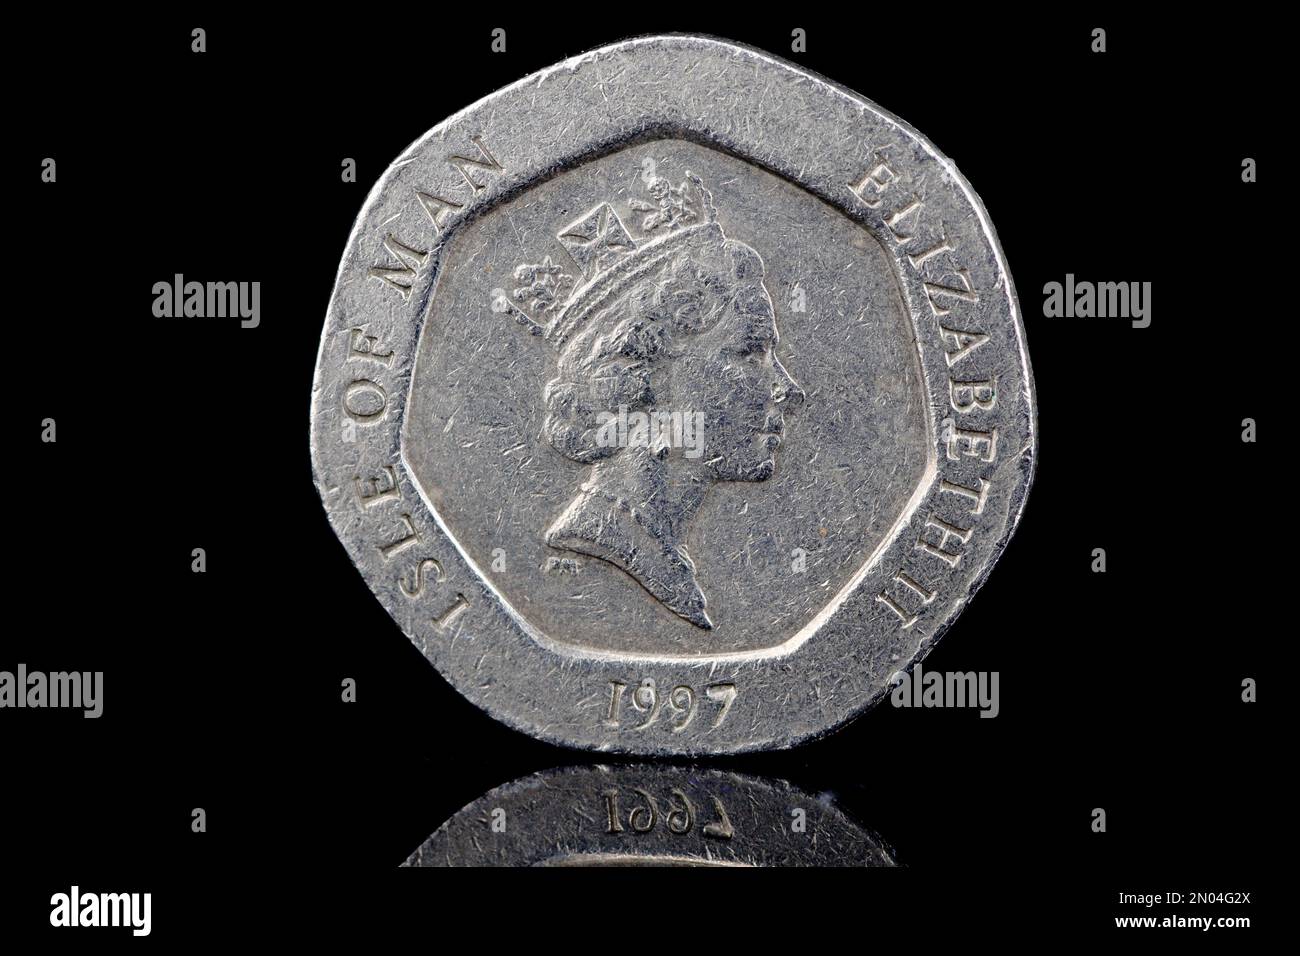 1997 Isle of Man 20P monete obverse con la regina Elisabetta II Foto Stock